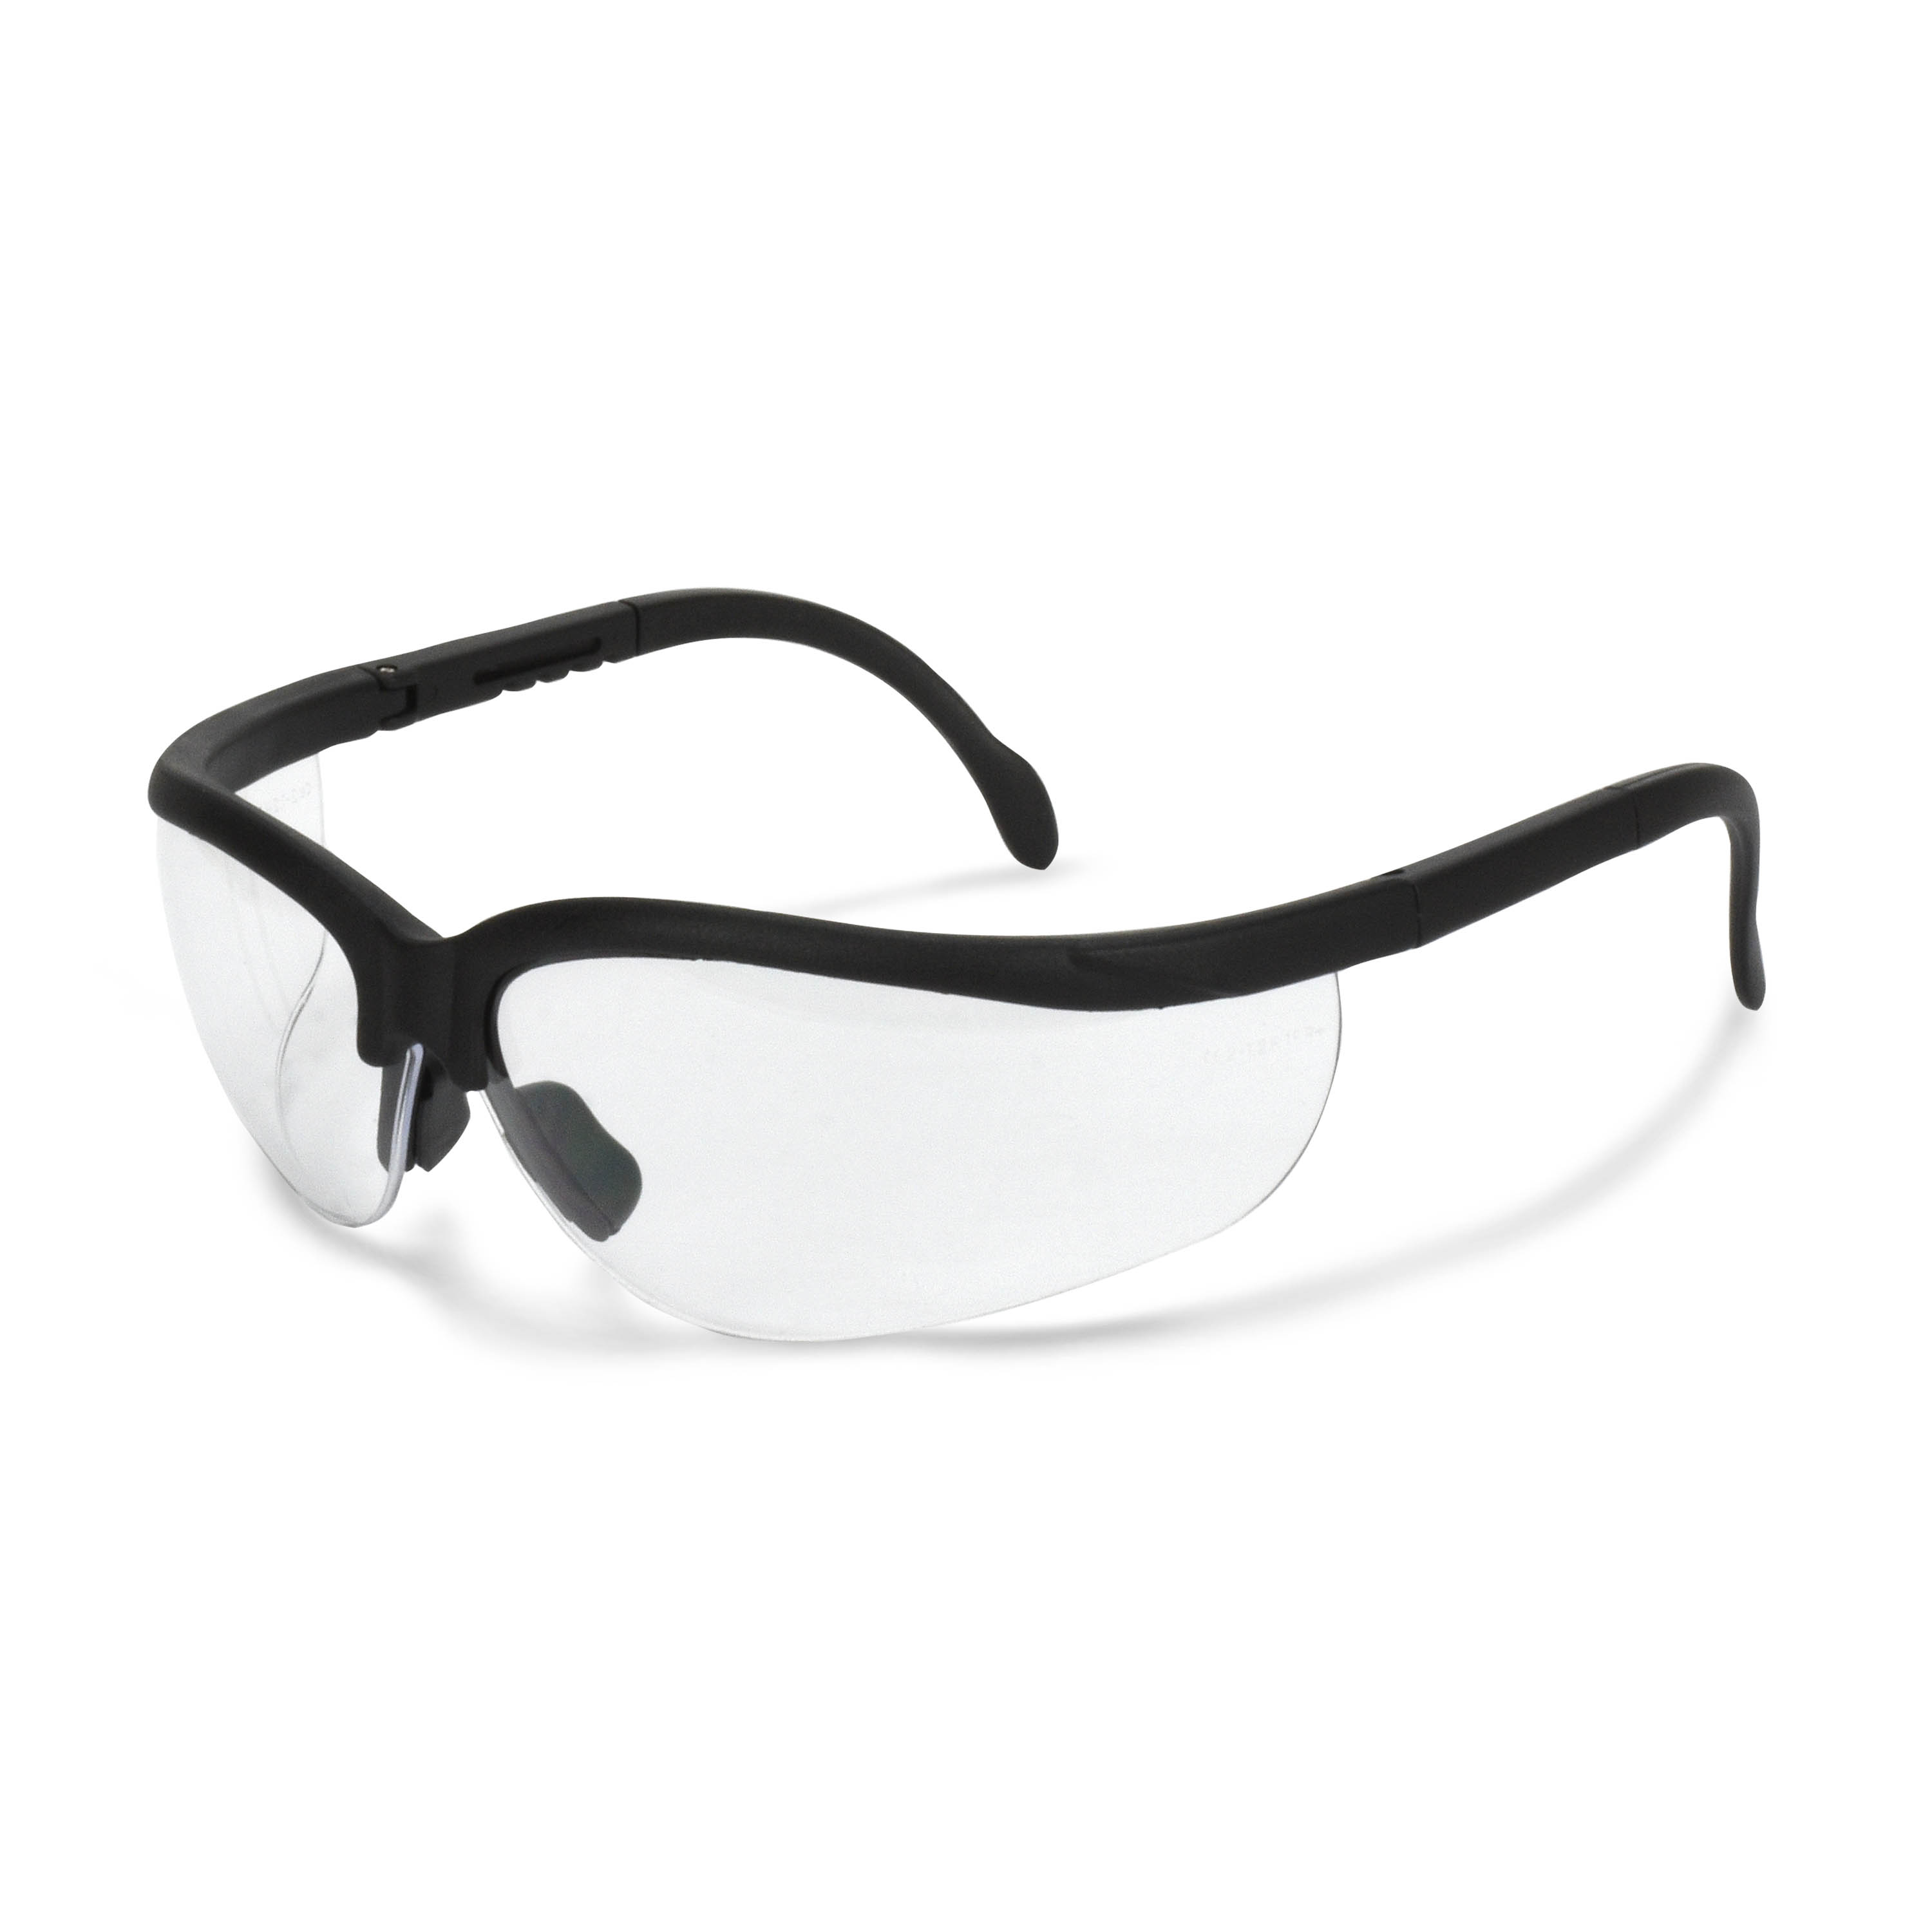 Journey® Safety Eyewear - Black Frame - Clear Lens - Clear Lens